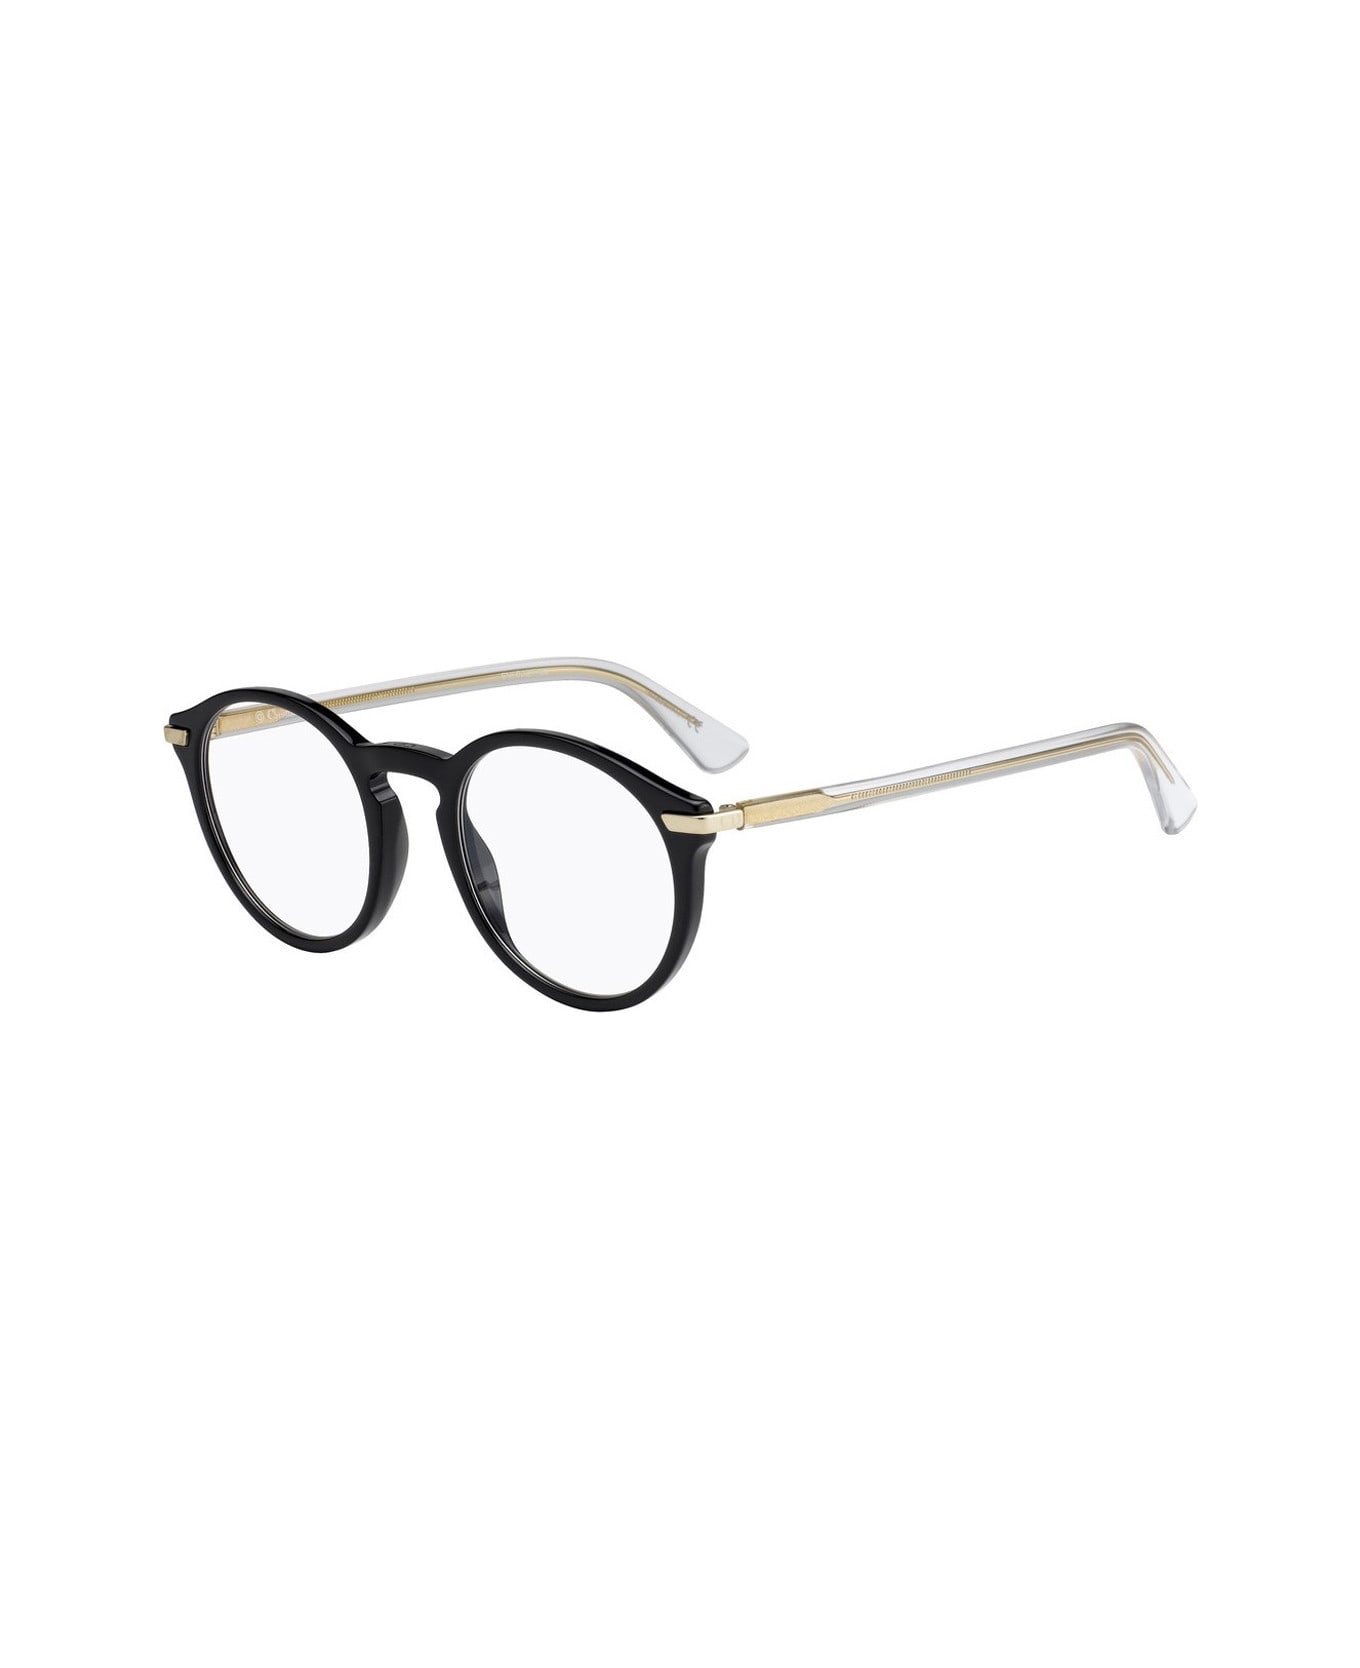 Dior Eyewear Essence5 Glasses - Nero